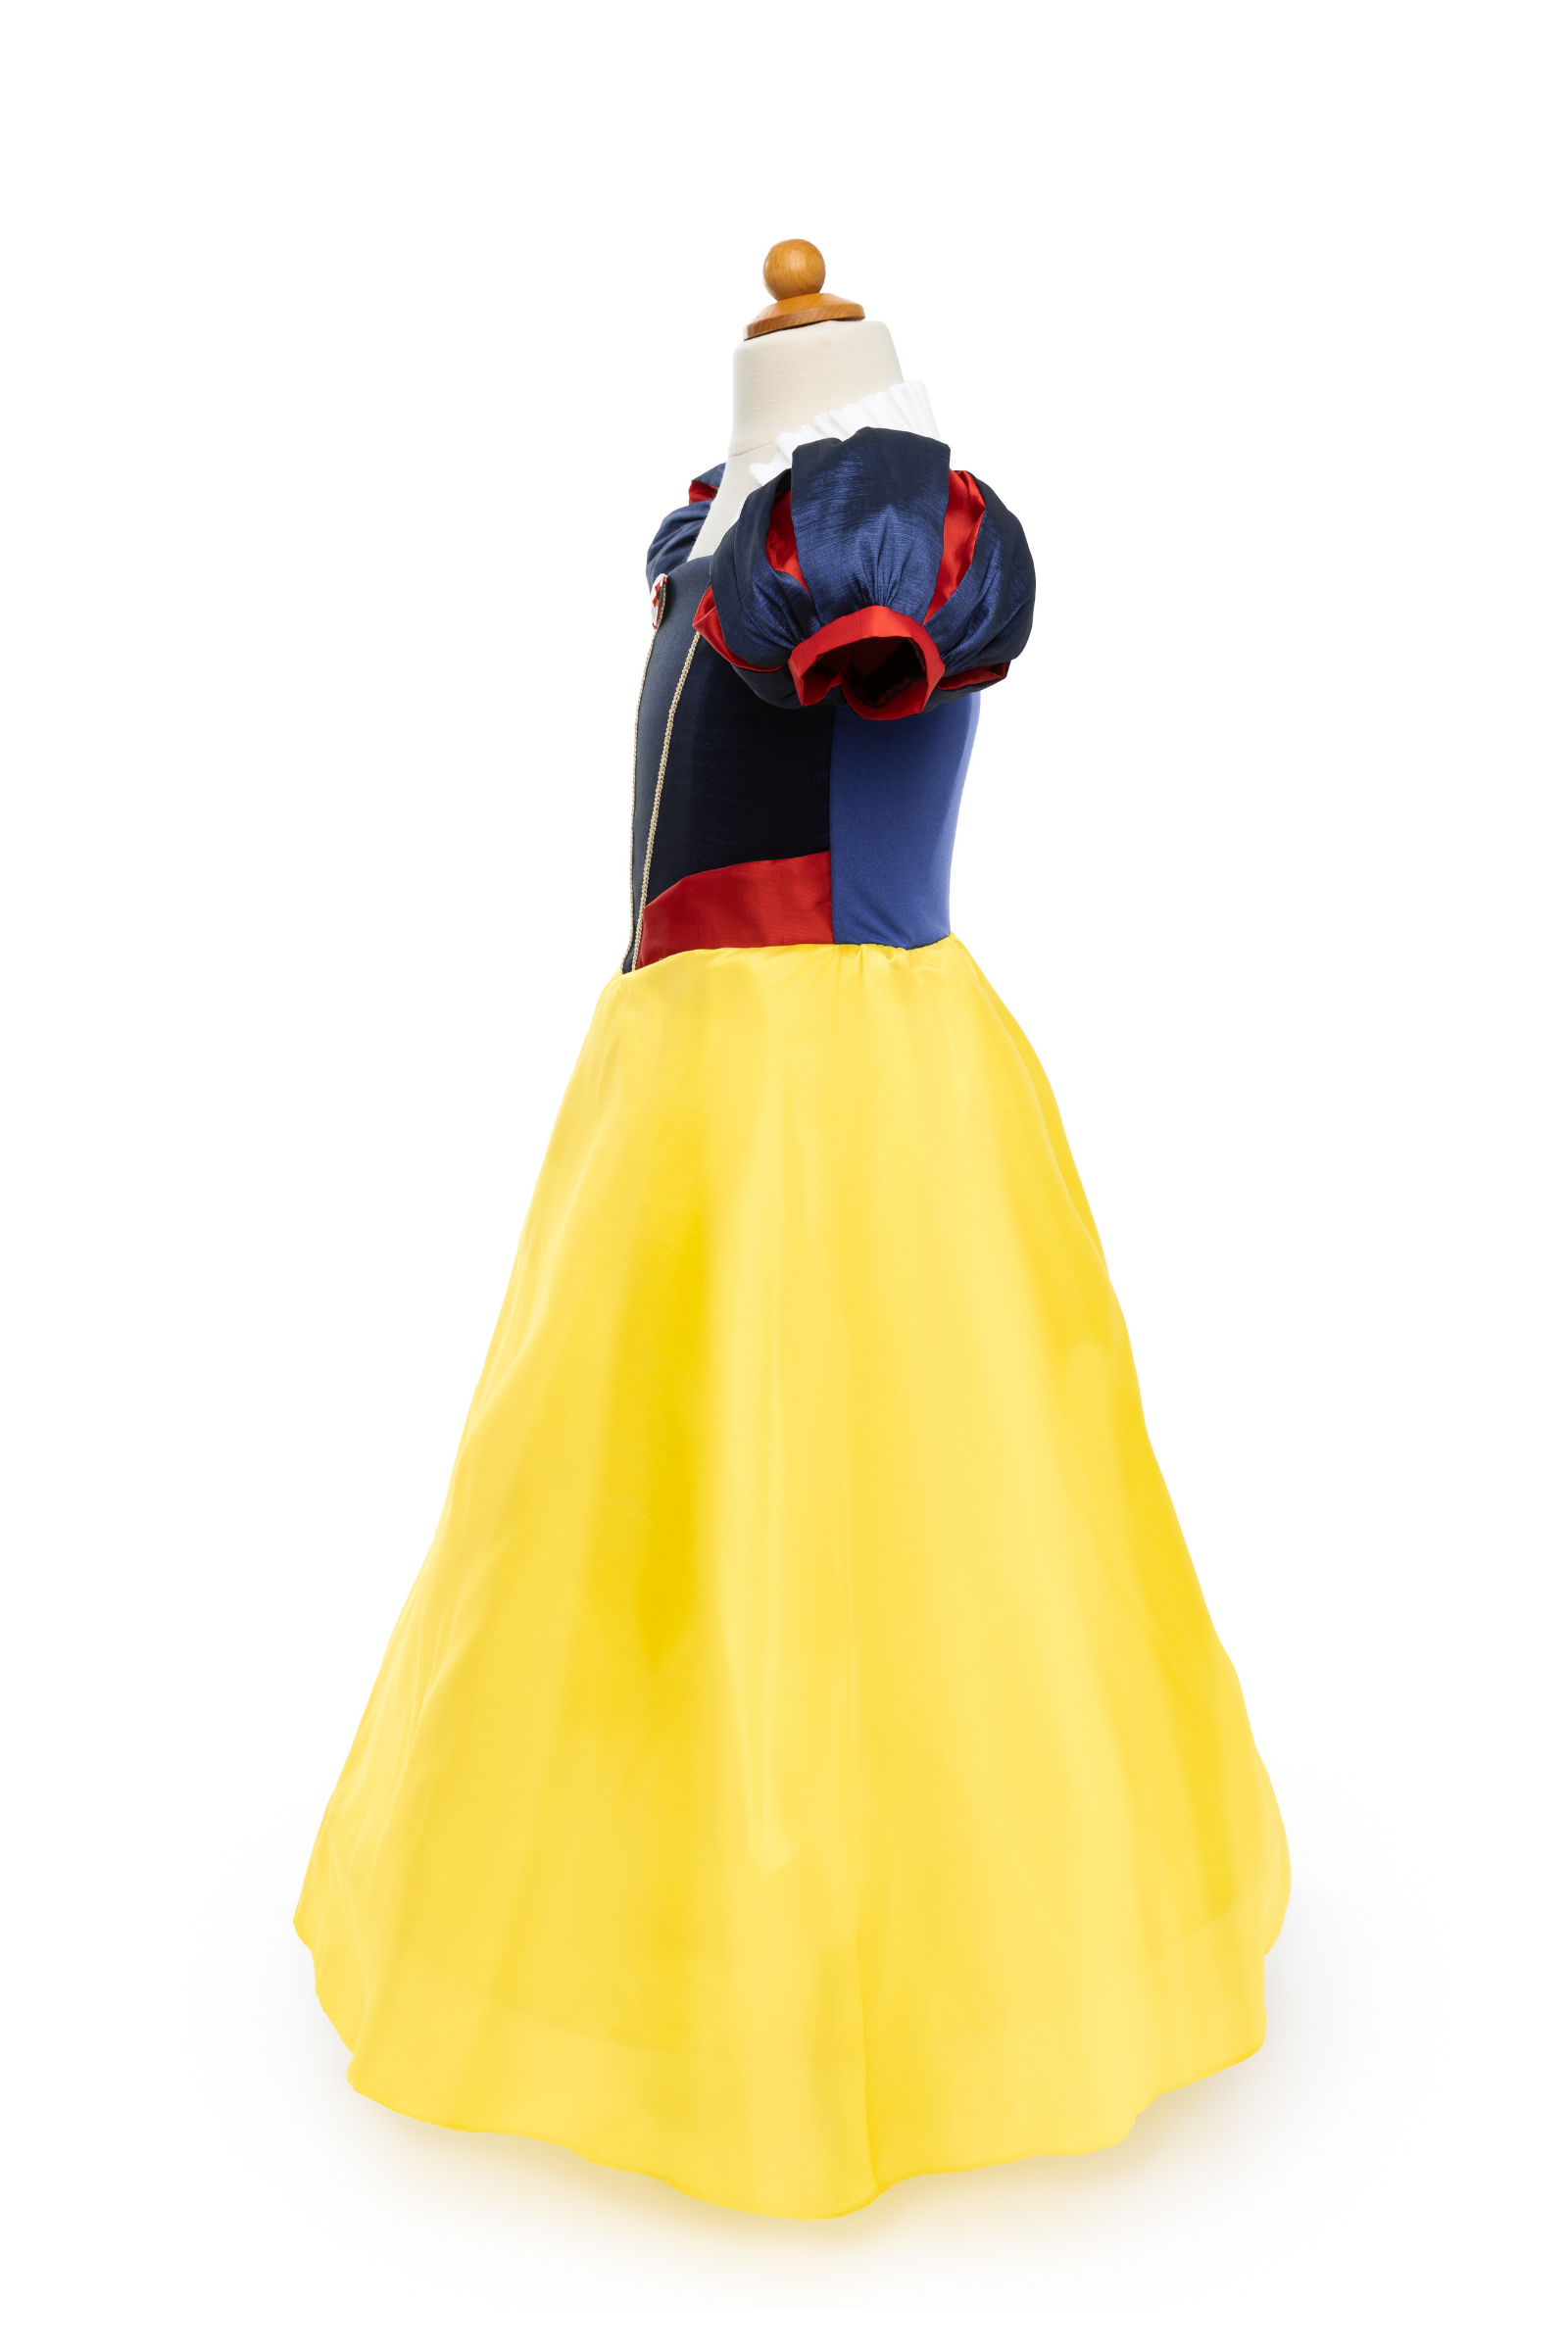 Boutique Snow White Gown